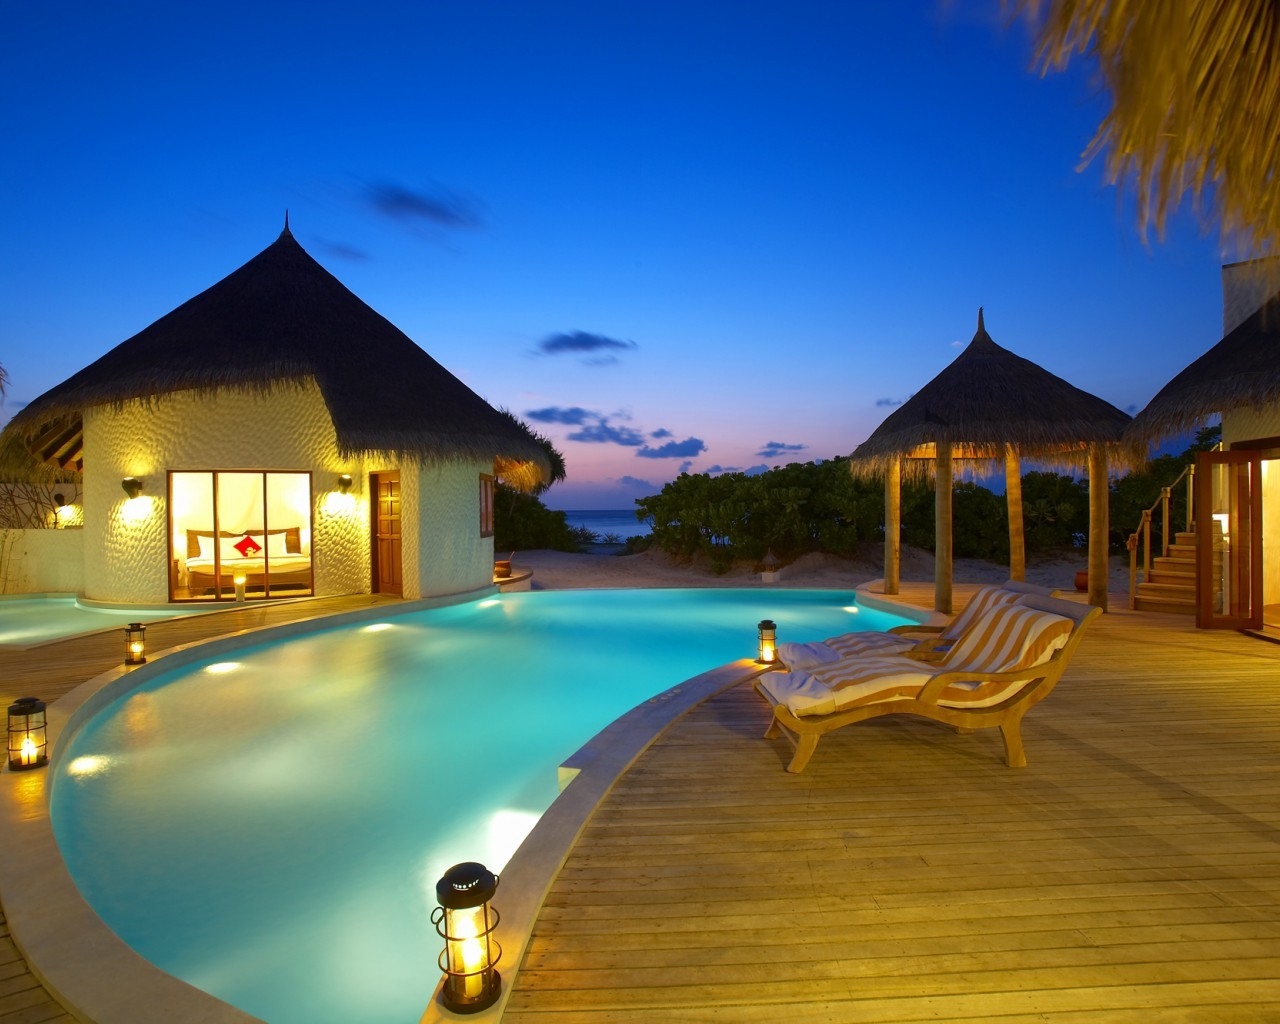 Maldives 5 Star Resort for 1280 x 1024 resolution